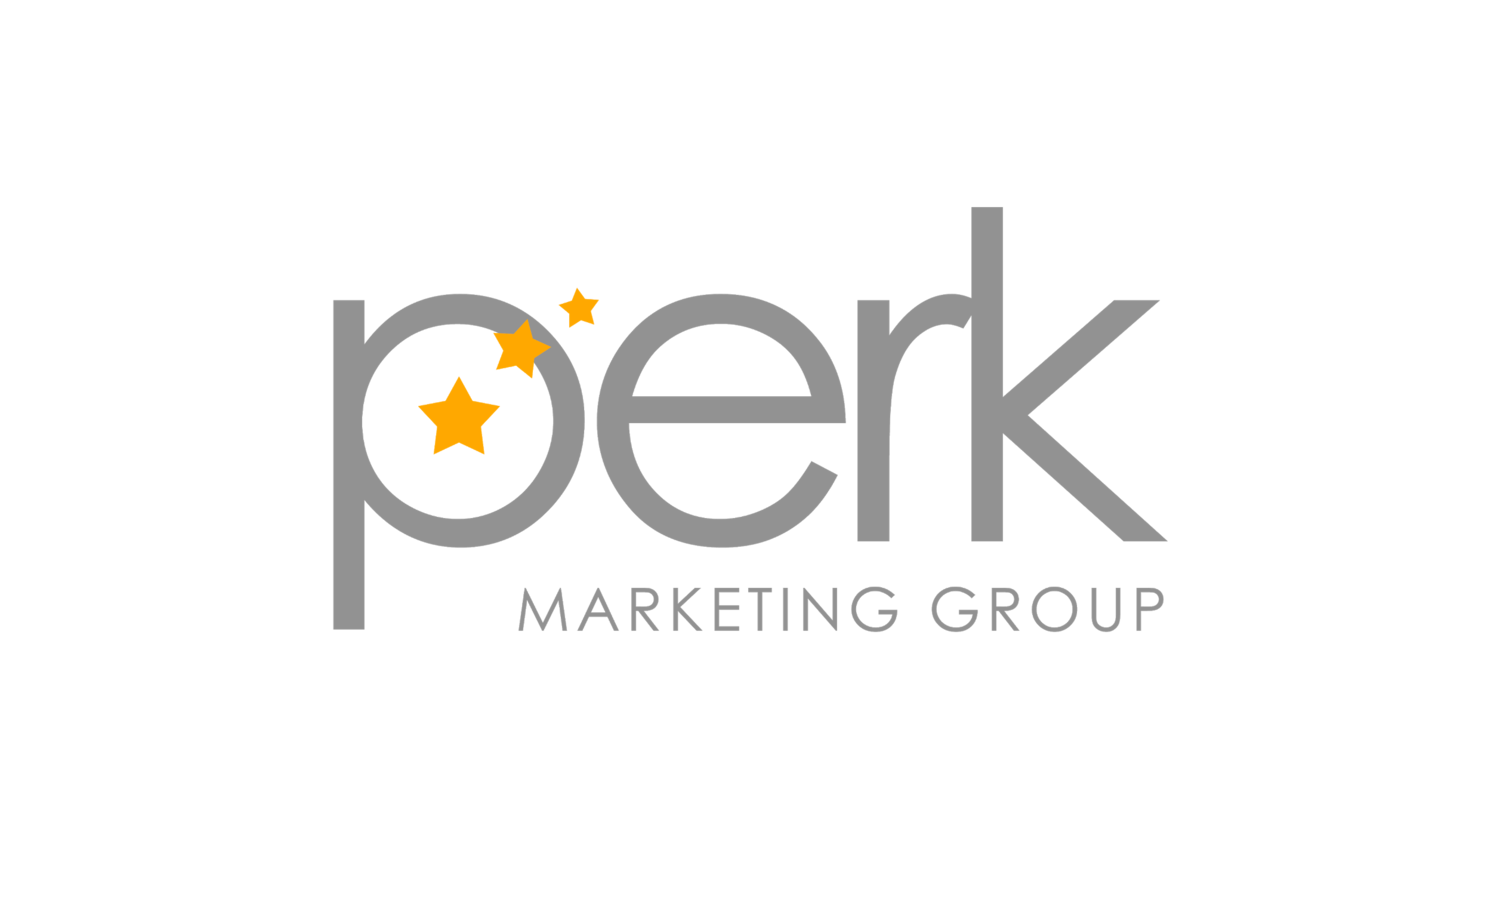 PerK Marketing Group